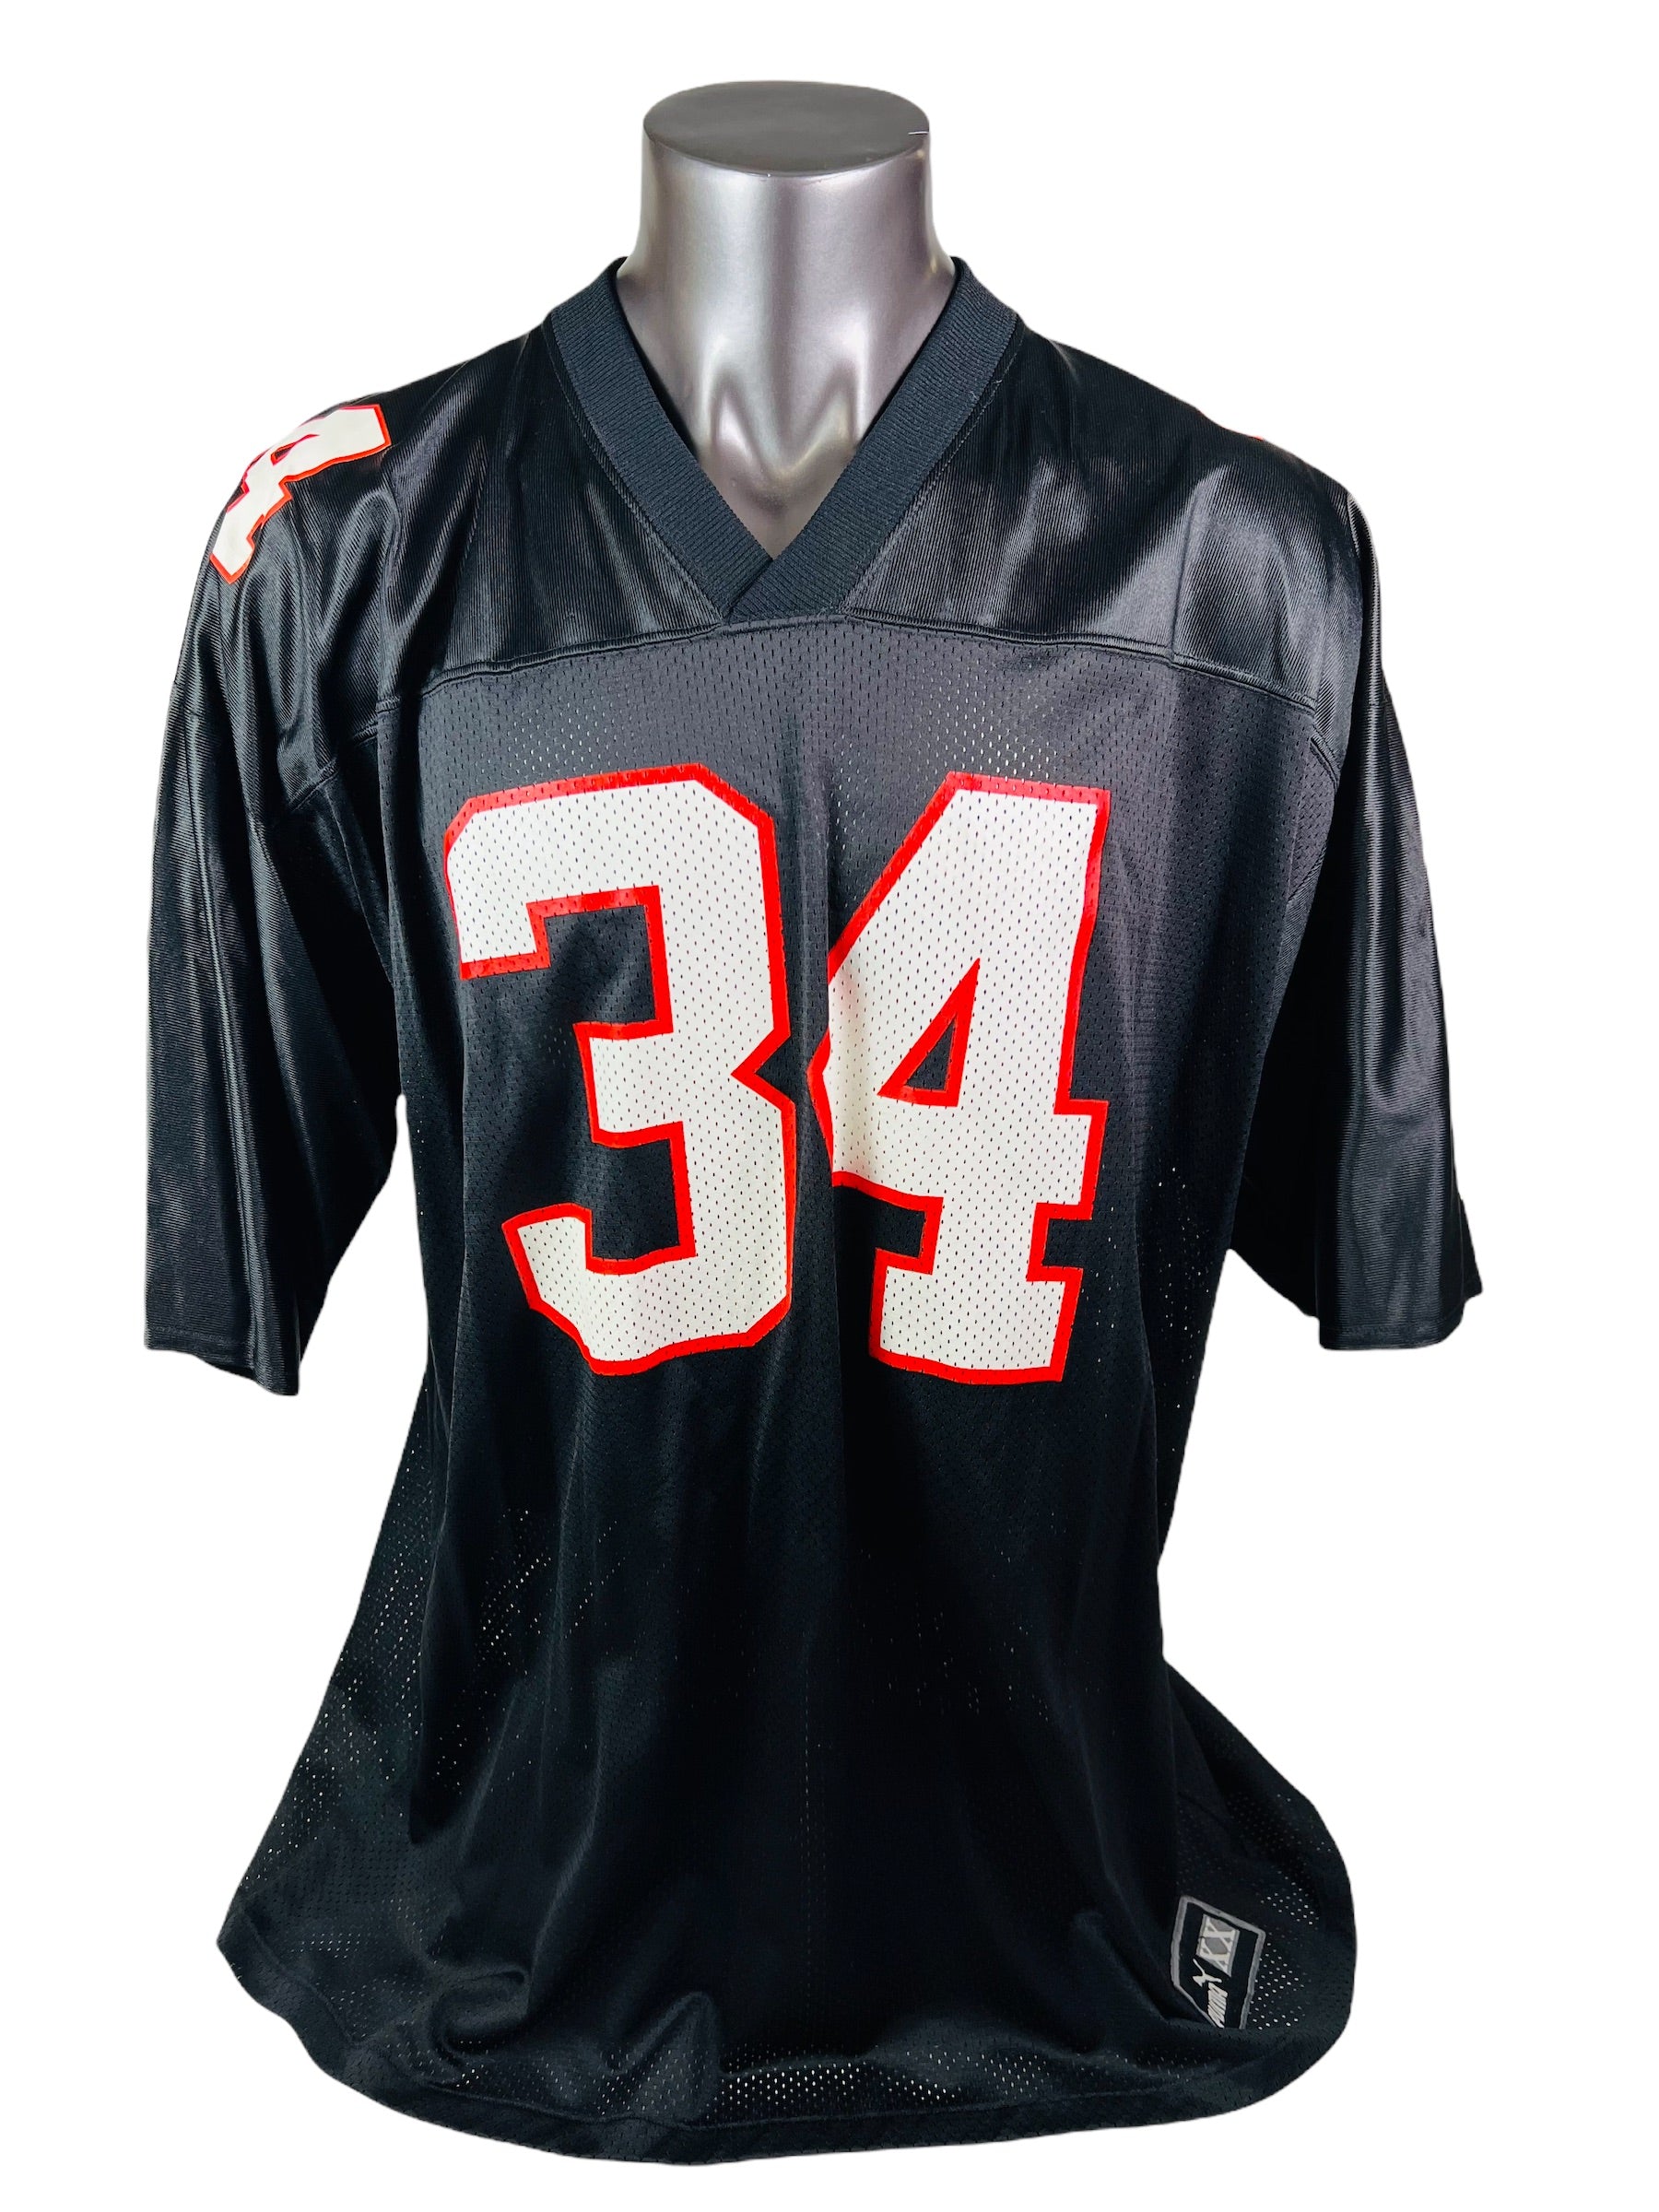 Atlanta Falcons Throwback Jerseys, Vintage NFL Gear